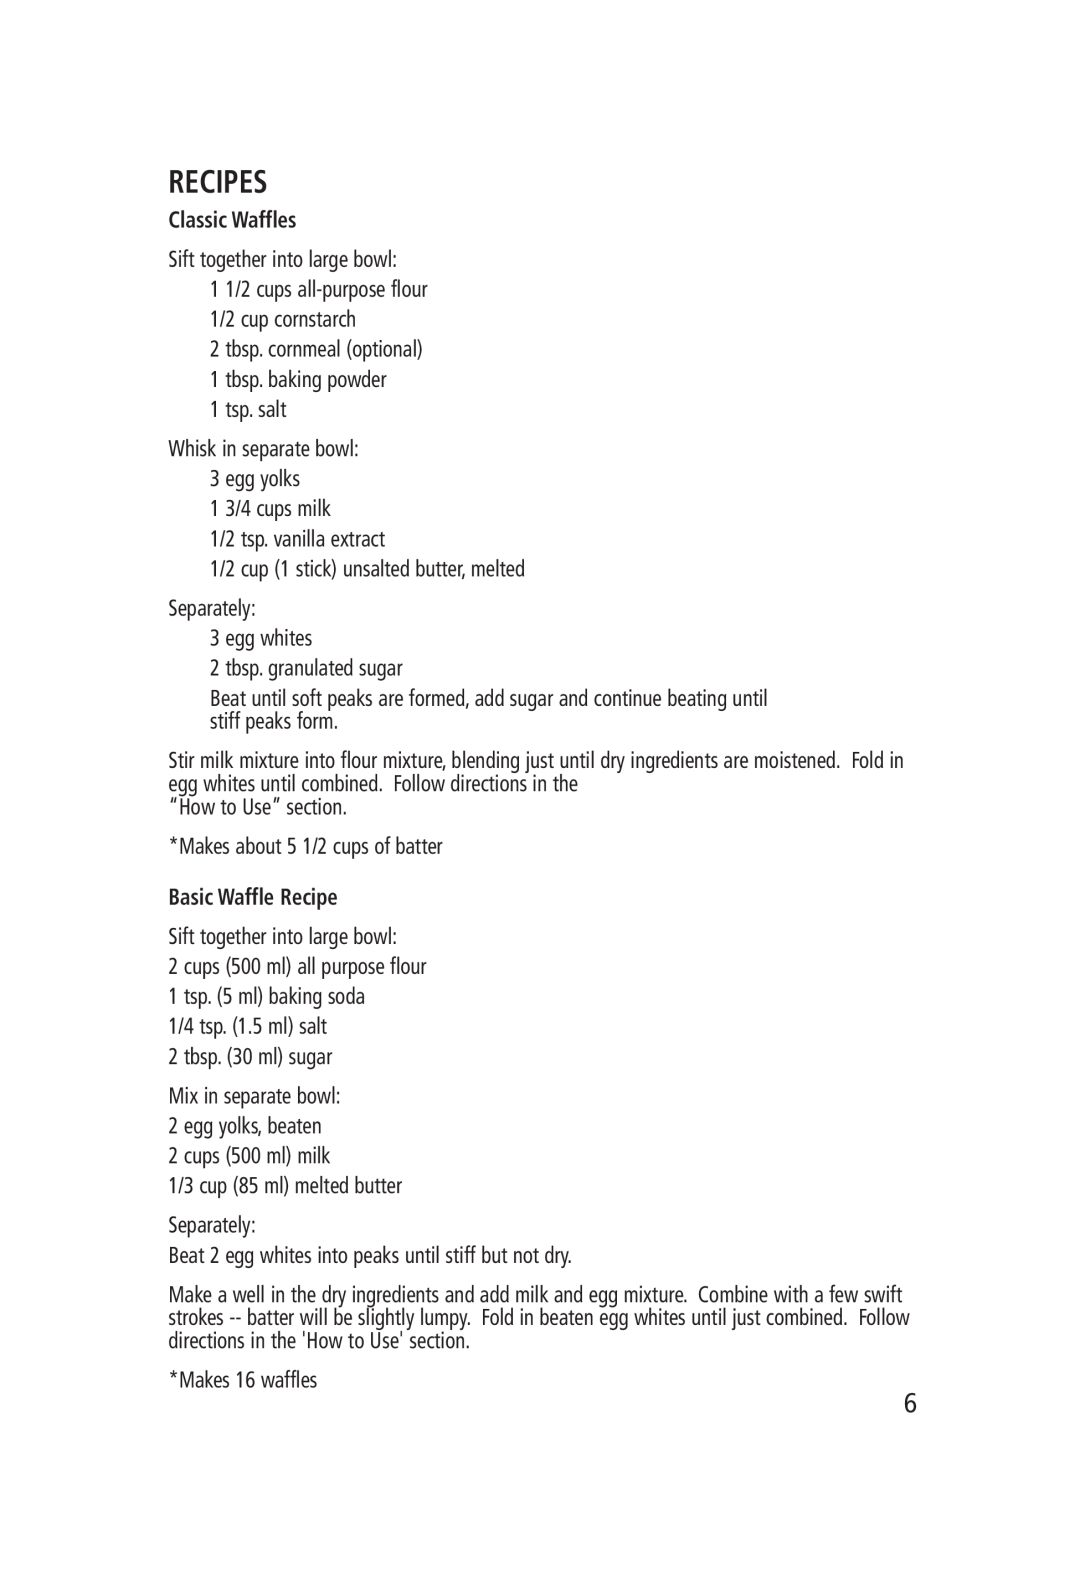 Salton WM-1186 manual Recipes, Classic Waffles, Basic Waffle Recipe 